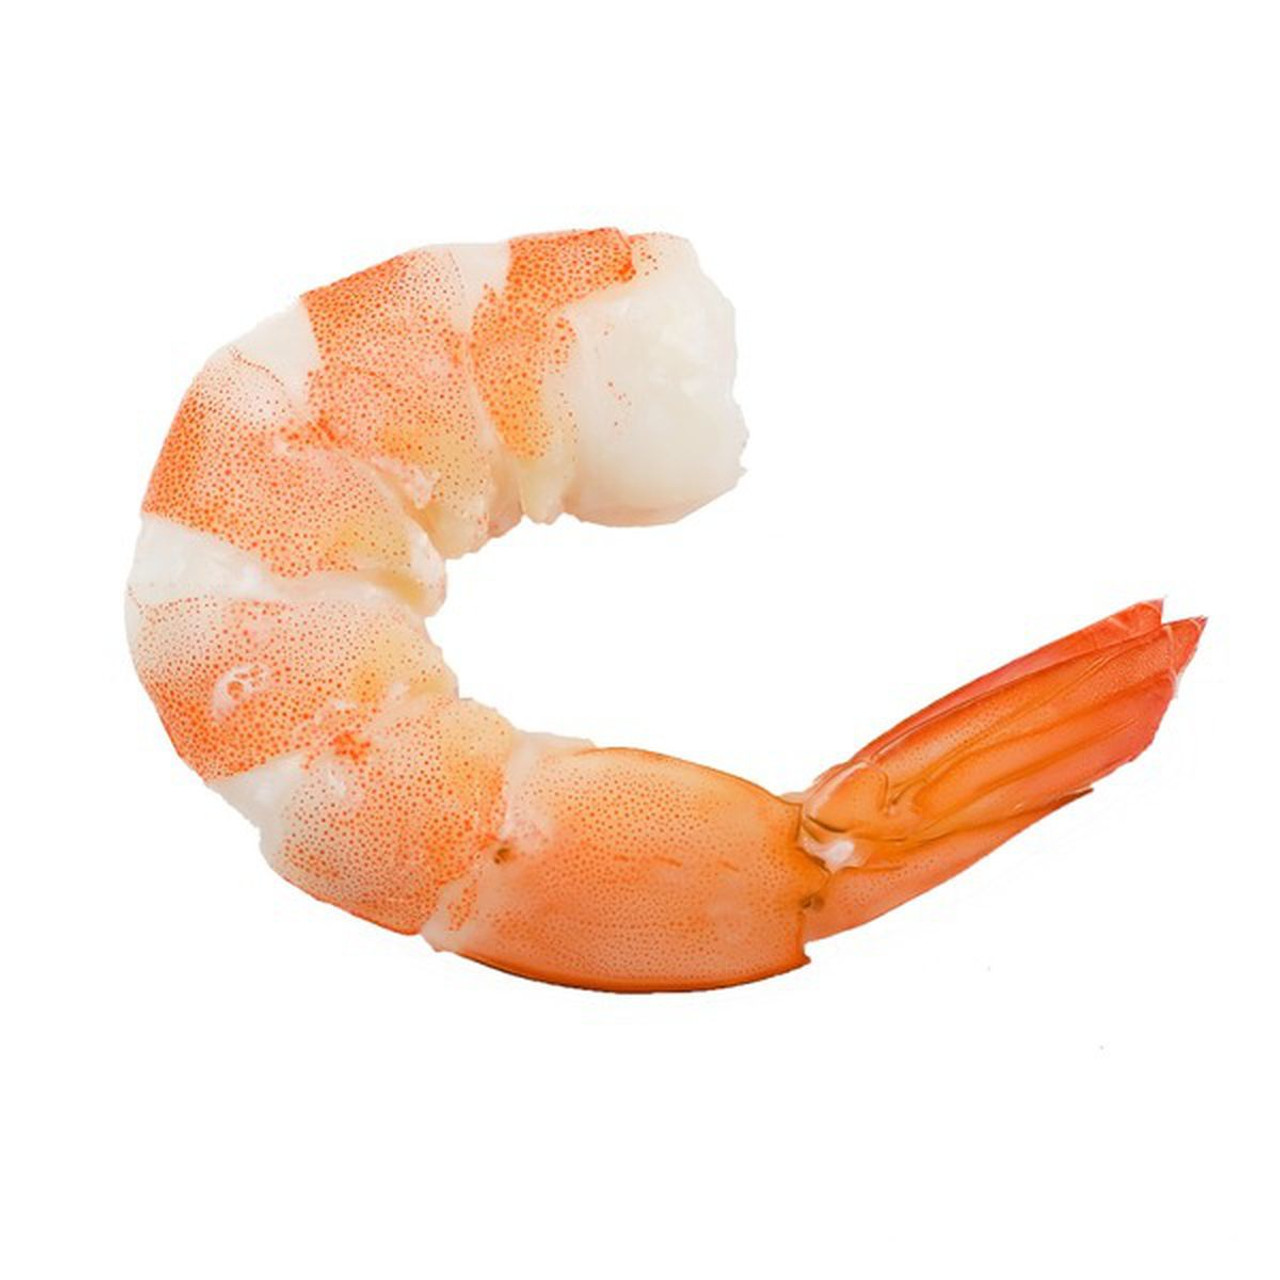 Jumbo Cooked Shrimp